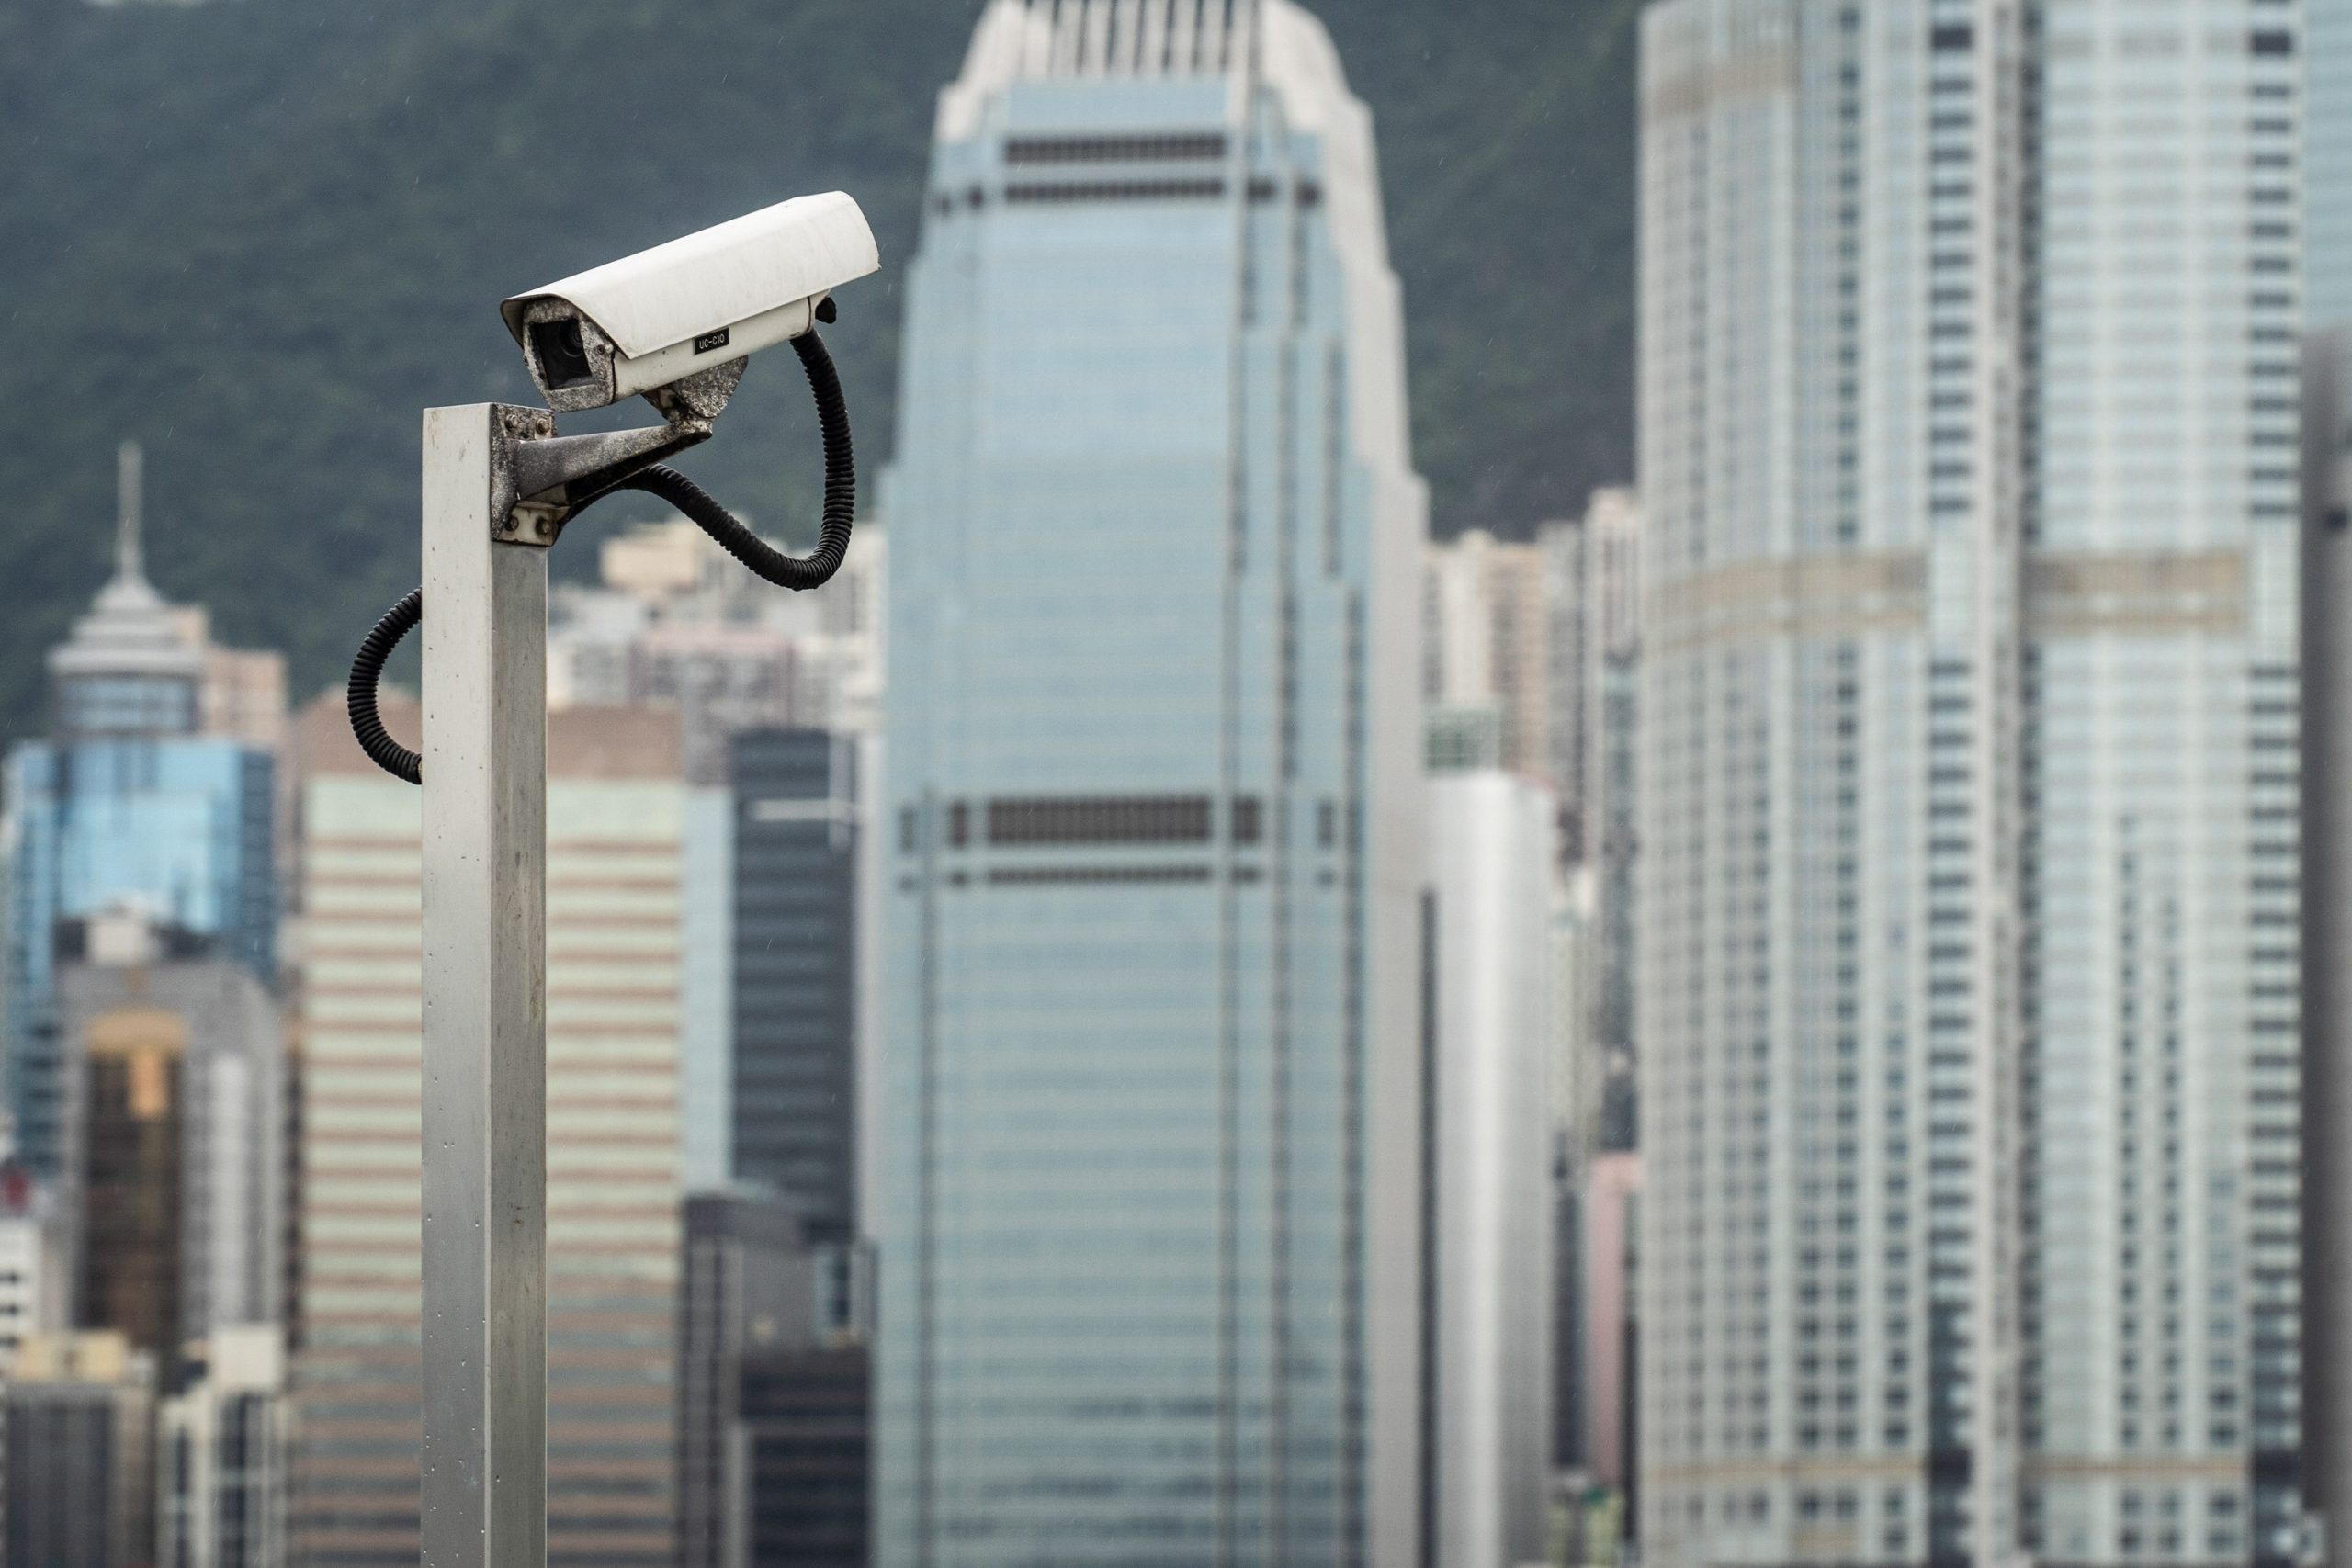 A surveillance camera outlined against a China city skyline